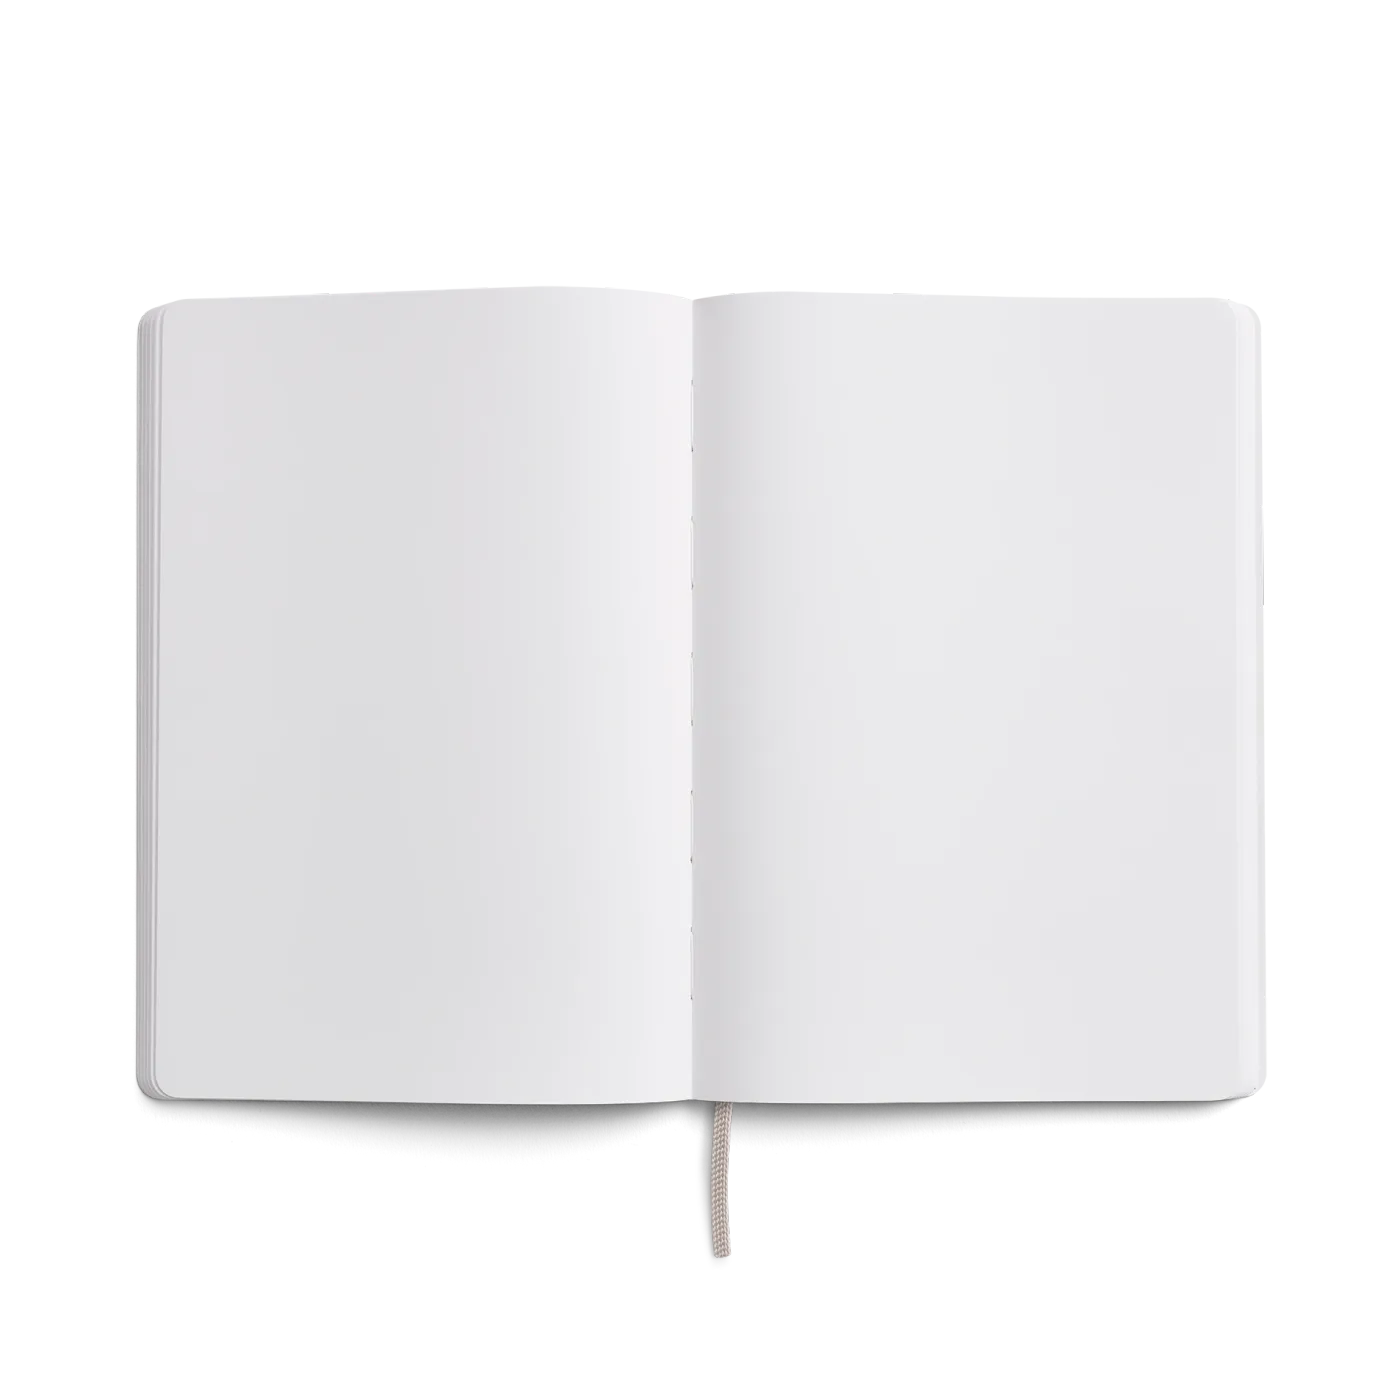 Karst Notebook A5 Softcover - Black (Blank)